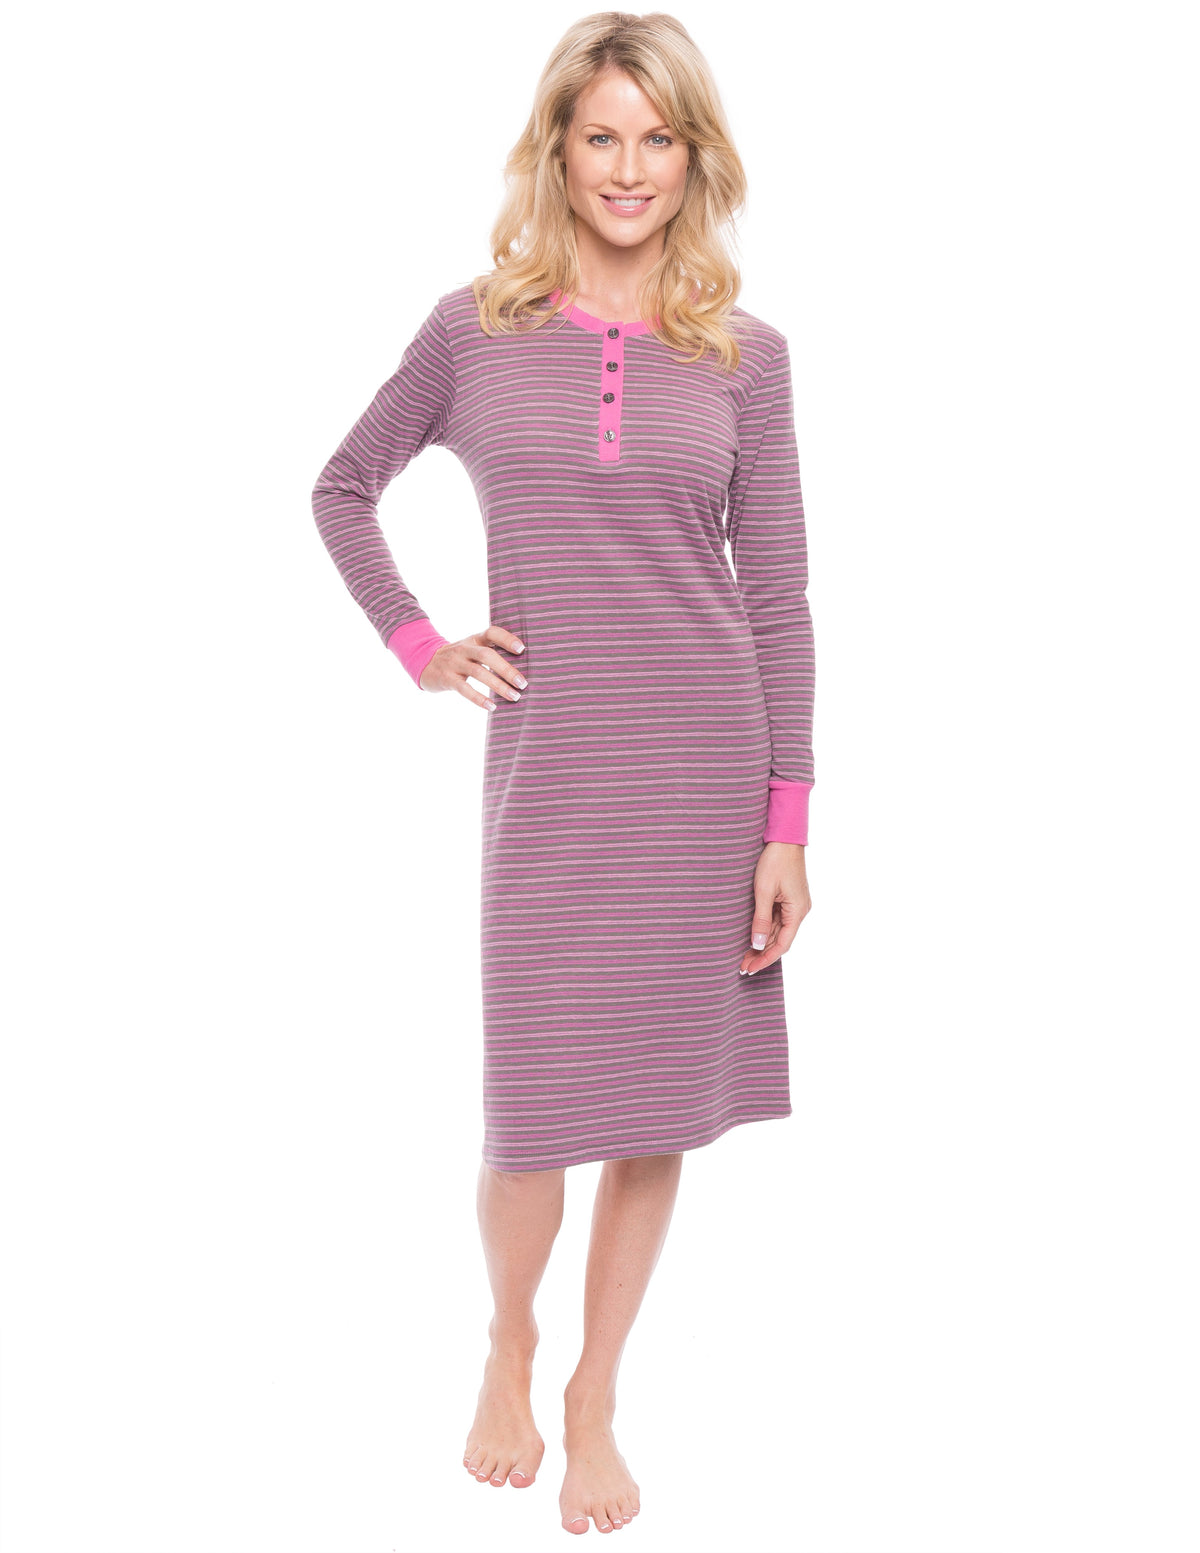 Women's Double Layer Knit Jersey Sleep Dress - Stripes Charcoal/Pink